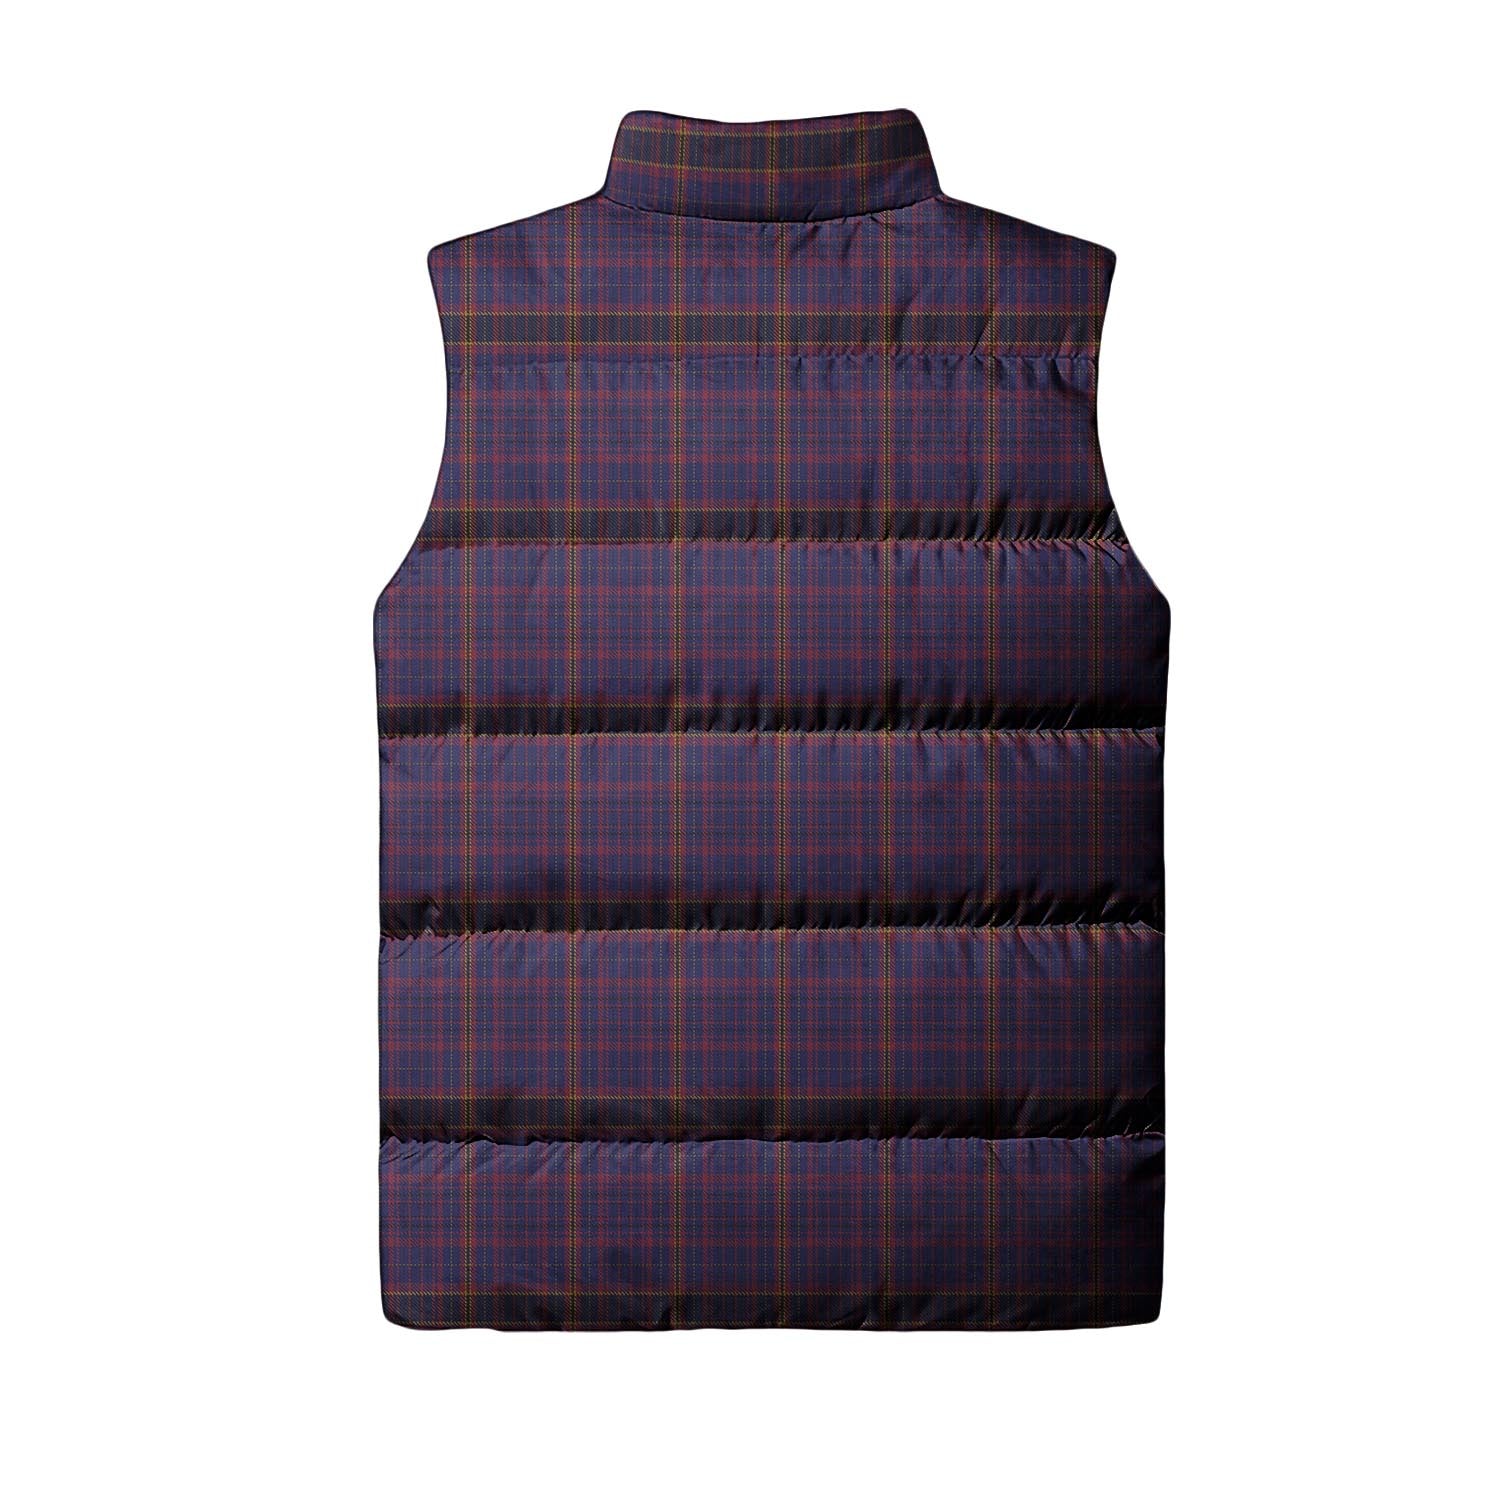 James of Wales Tartan Sleeveless Puffer Jacket - Tartanvibesclothing